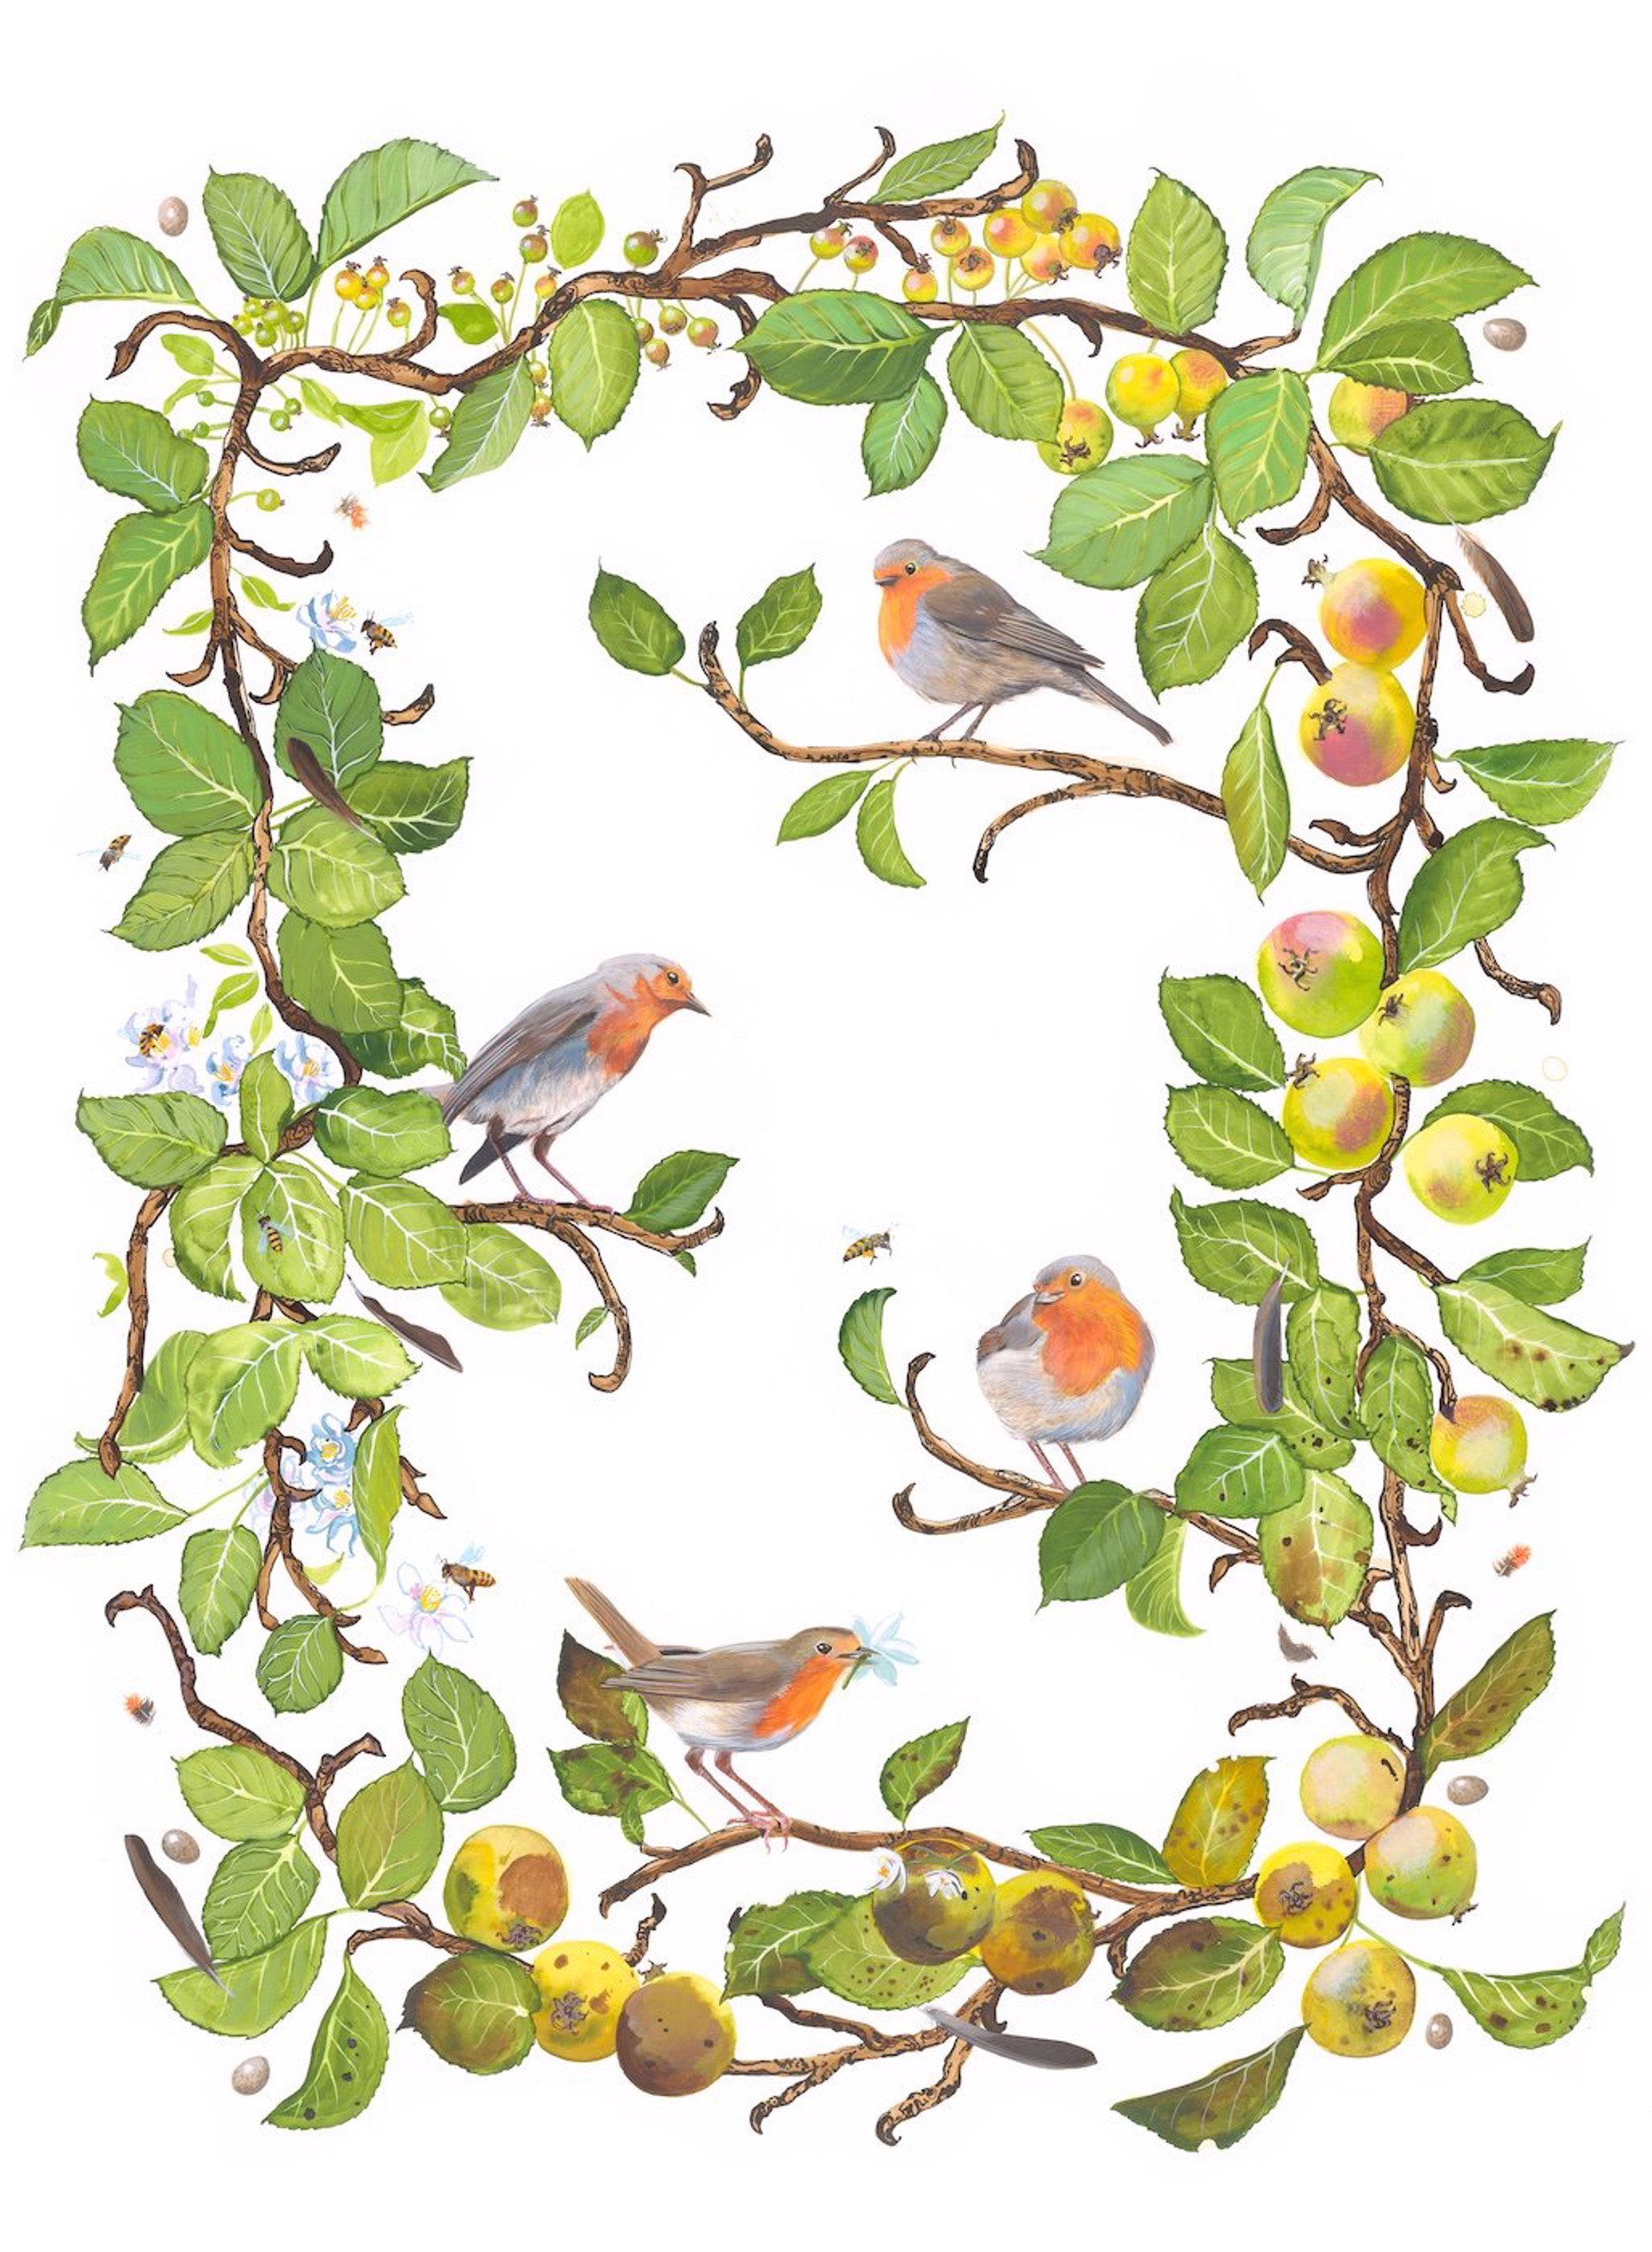 Birds of Shakespeare: European Robin by Missy Dunaway